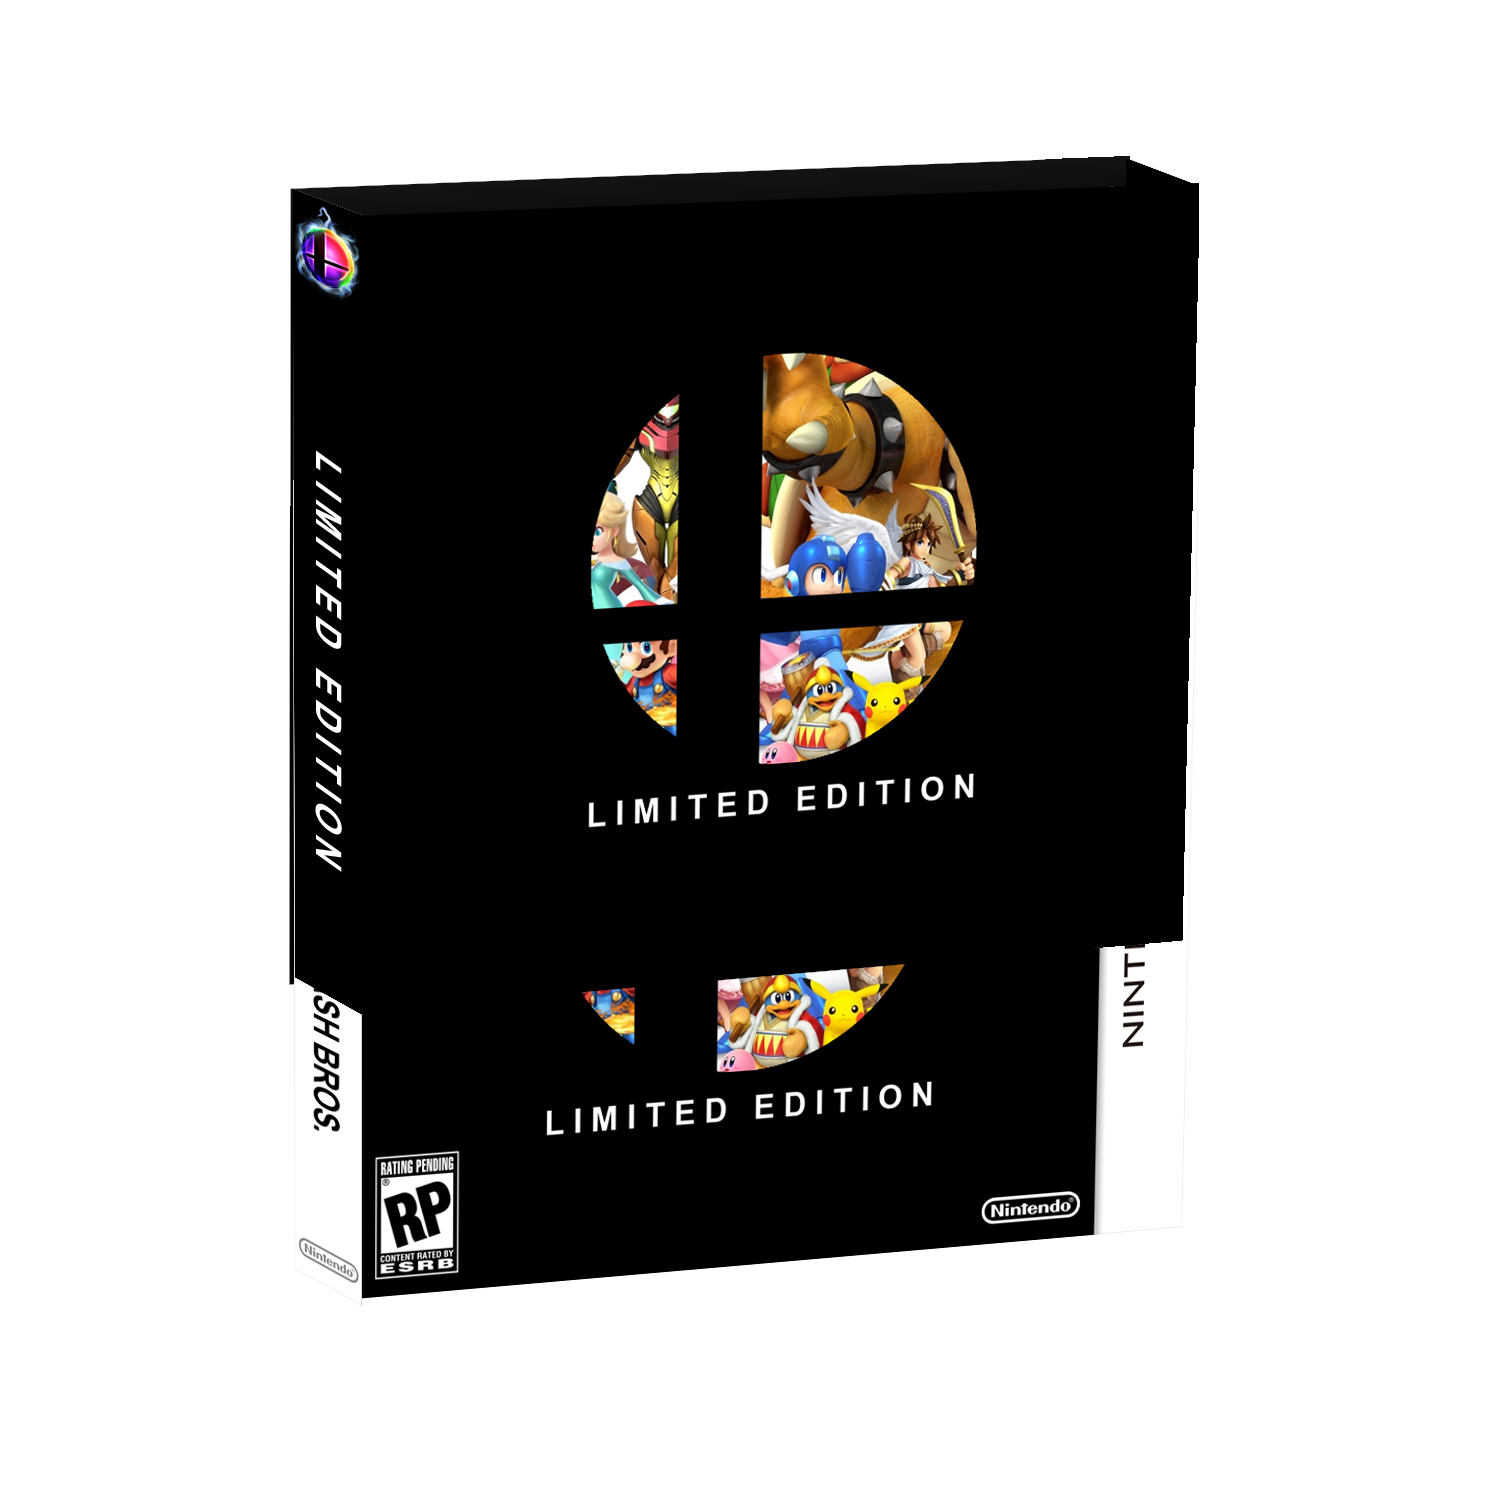 Super Smash Bros - Limited Edition box cover